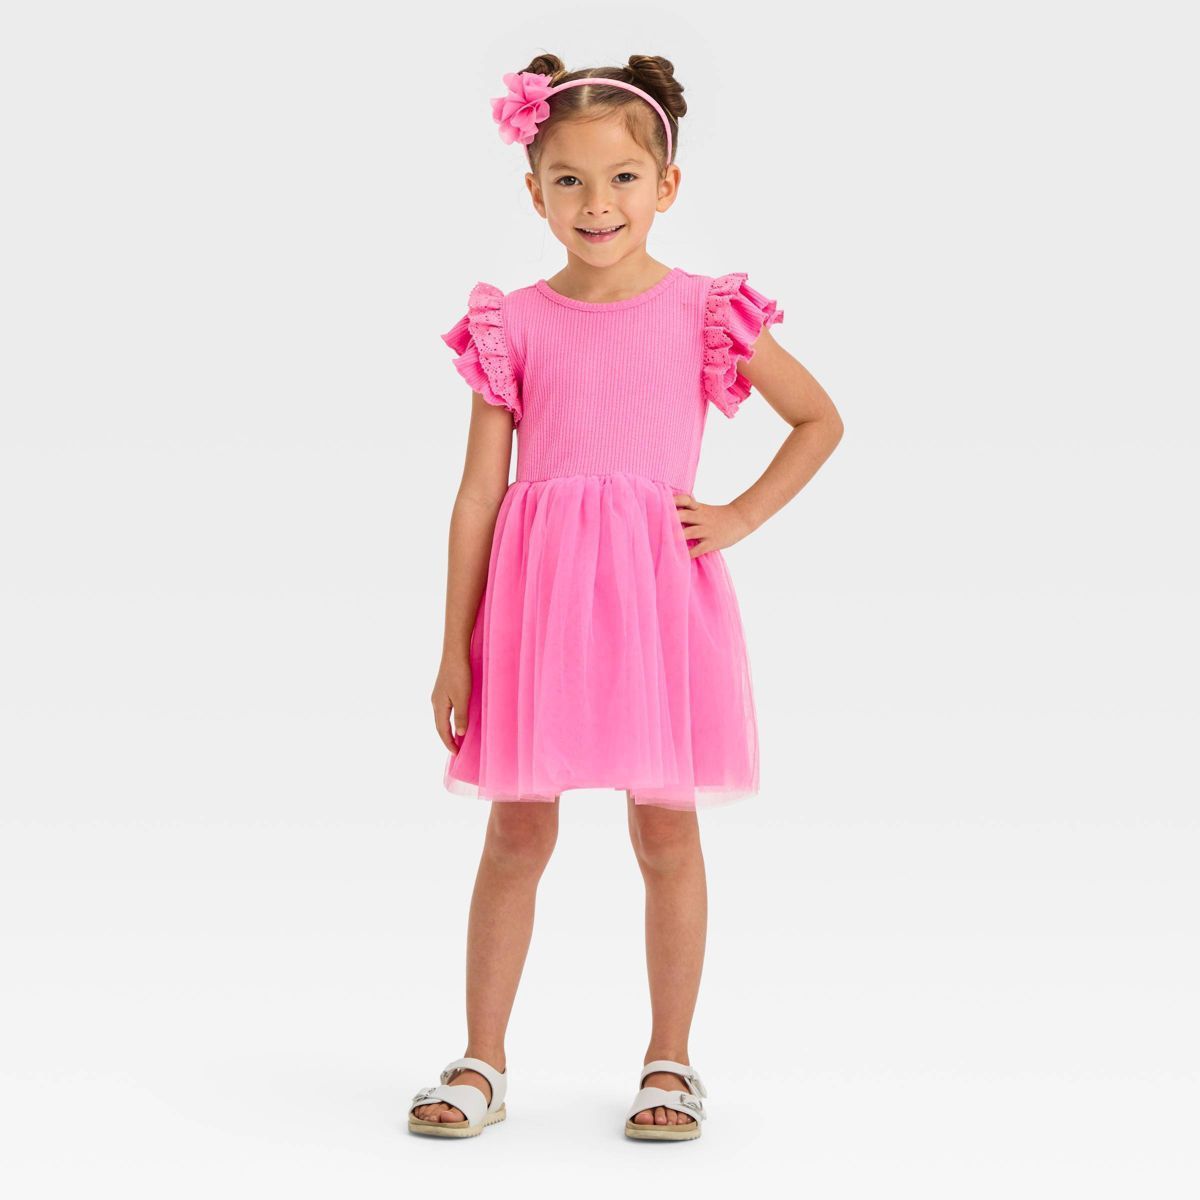 Toddler Girls' Tulle Dress - Cat & Jack™ Blue 12M | Target